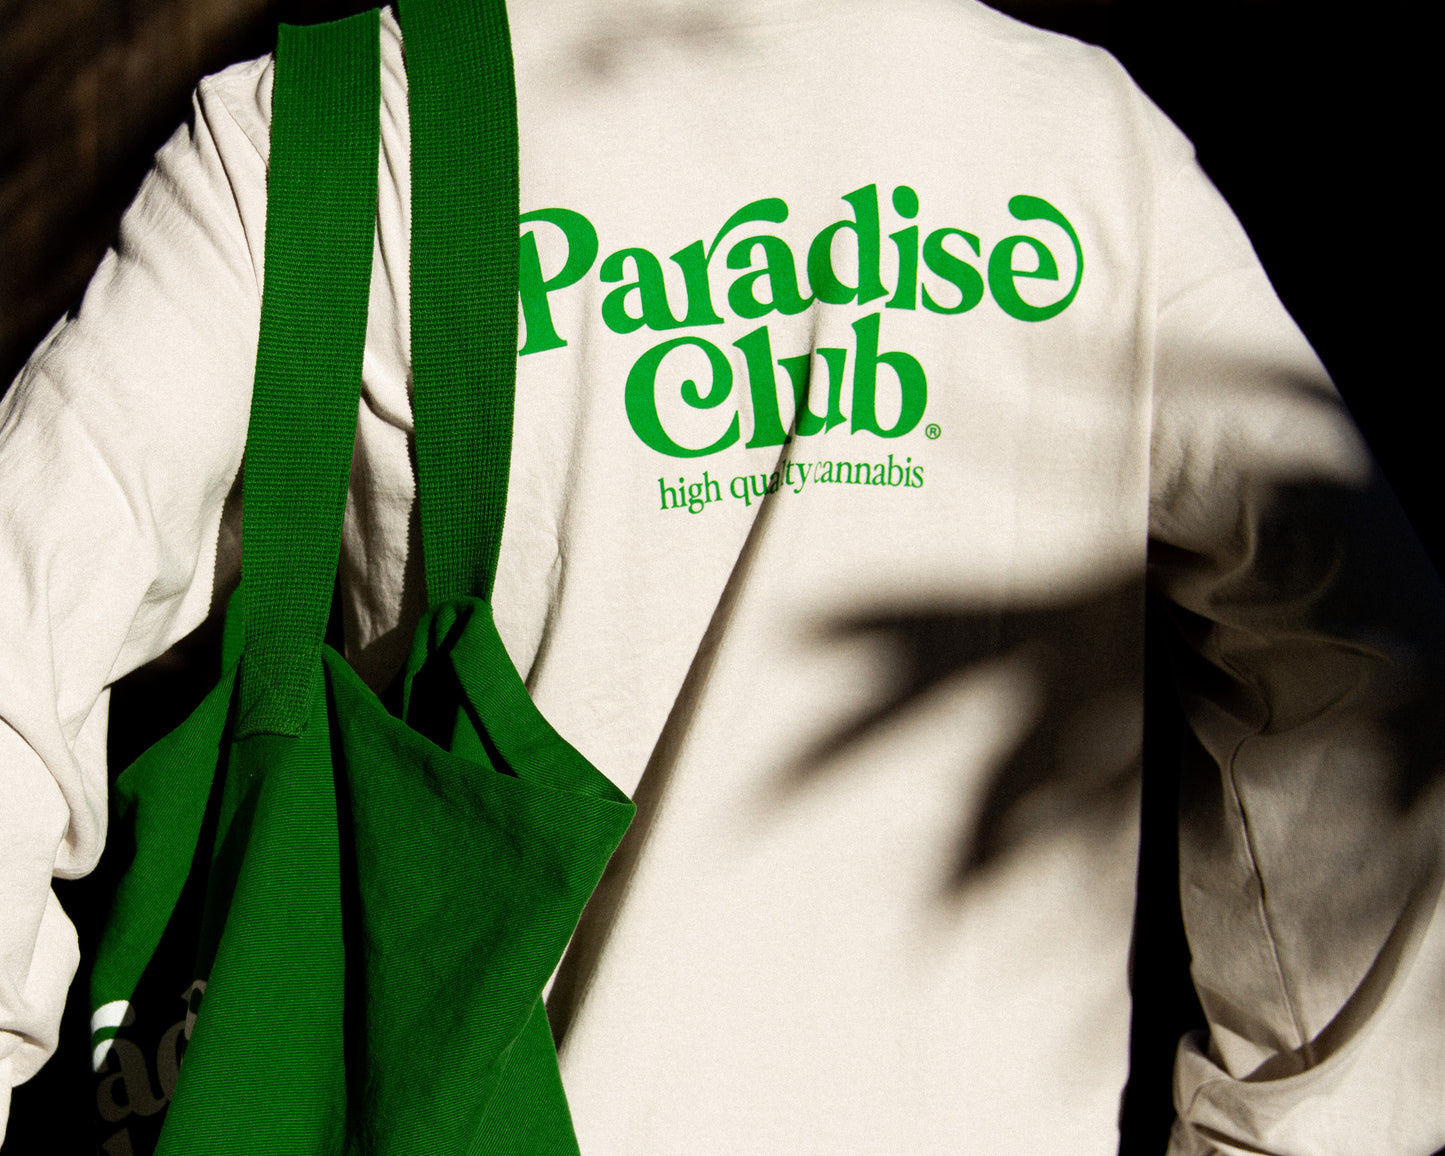 Paradise Club Long Sleeve